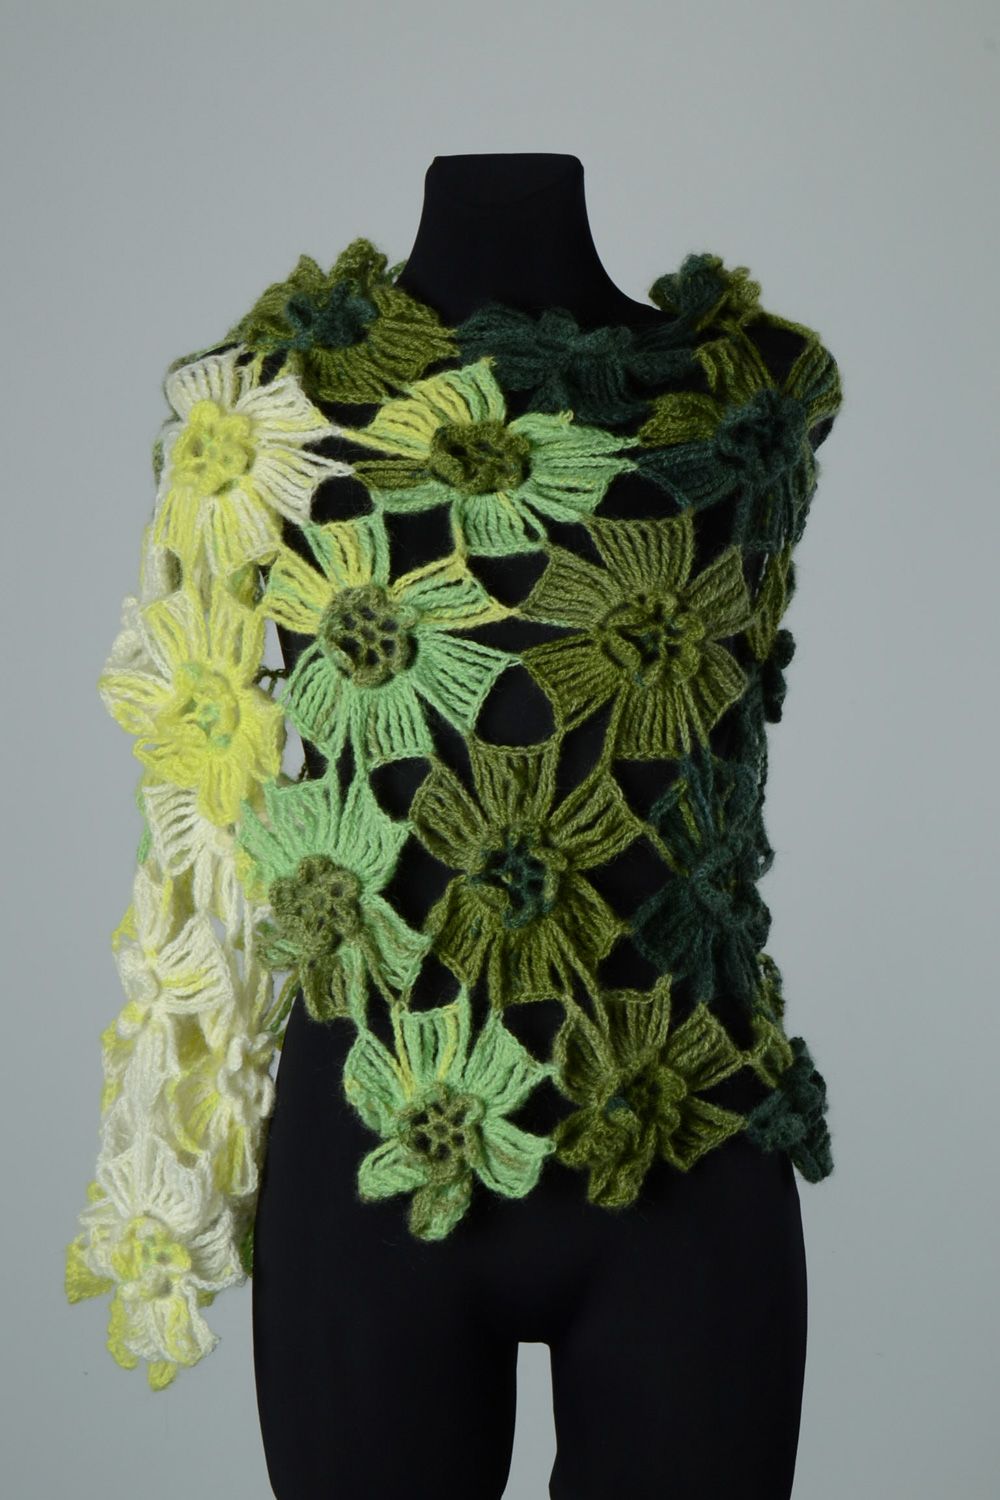 Homemade festive crochet angora and wool women's shawl photo 1